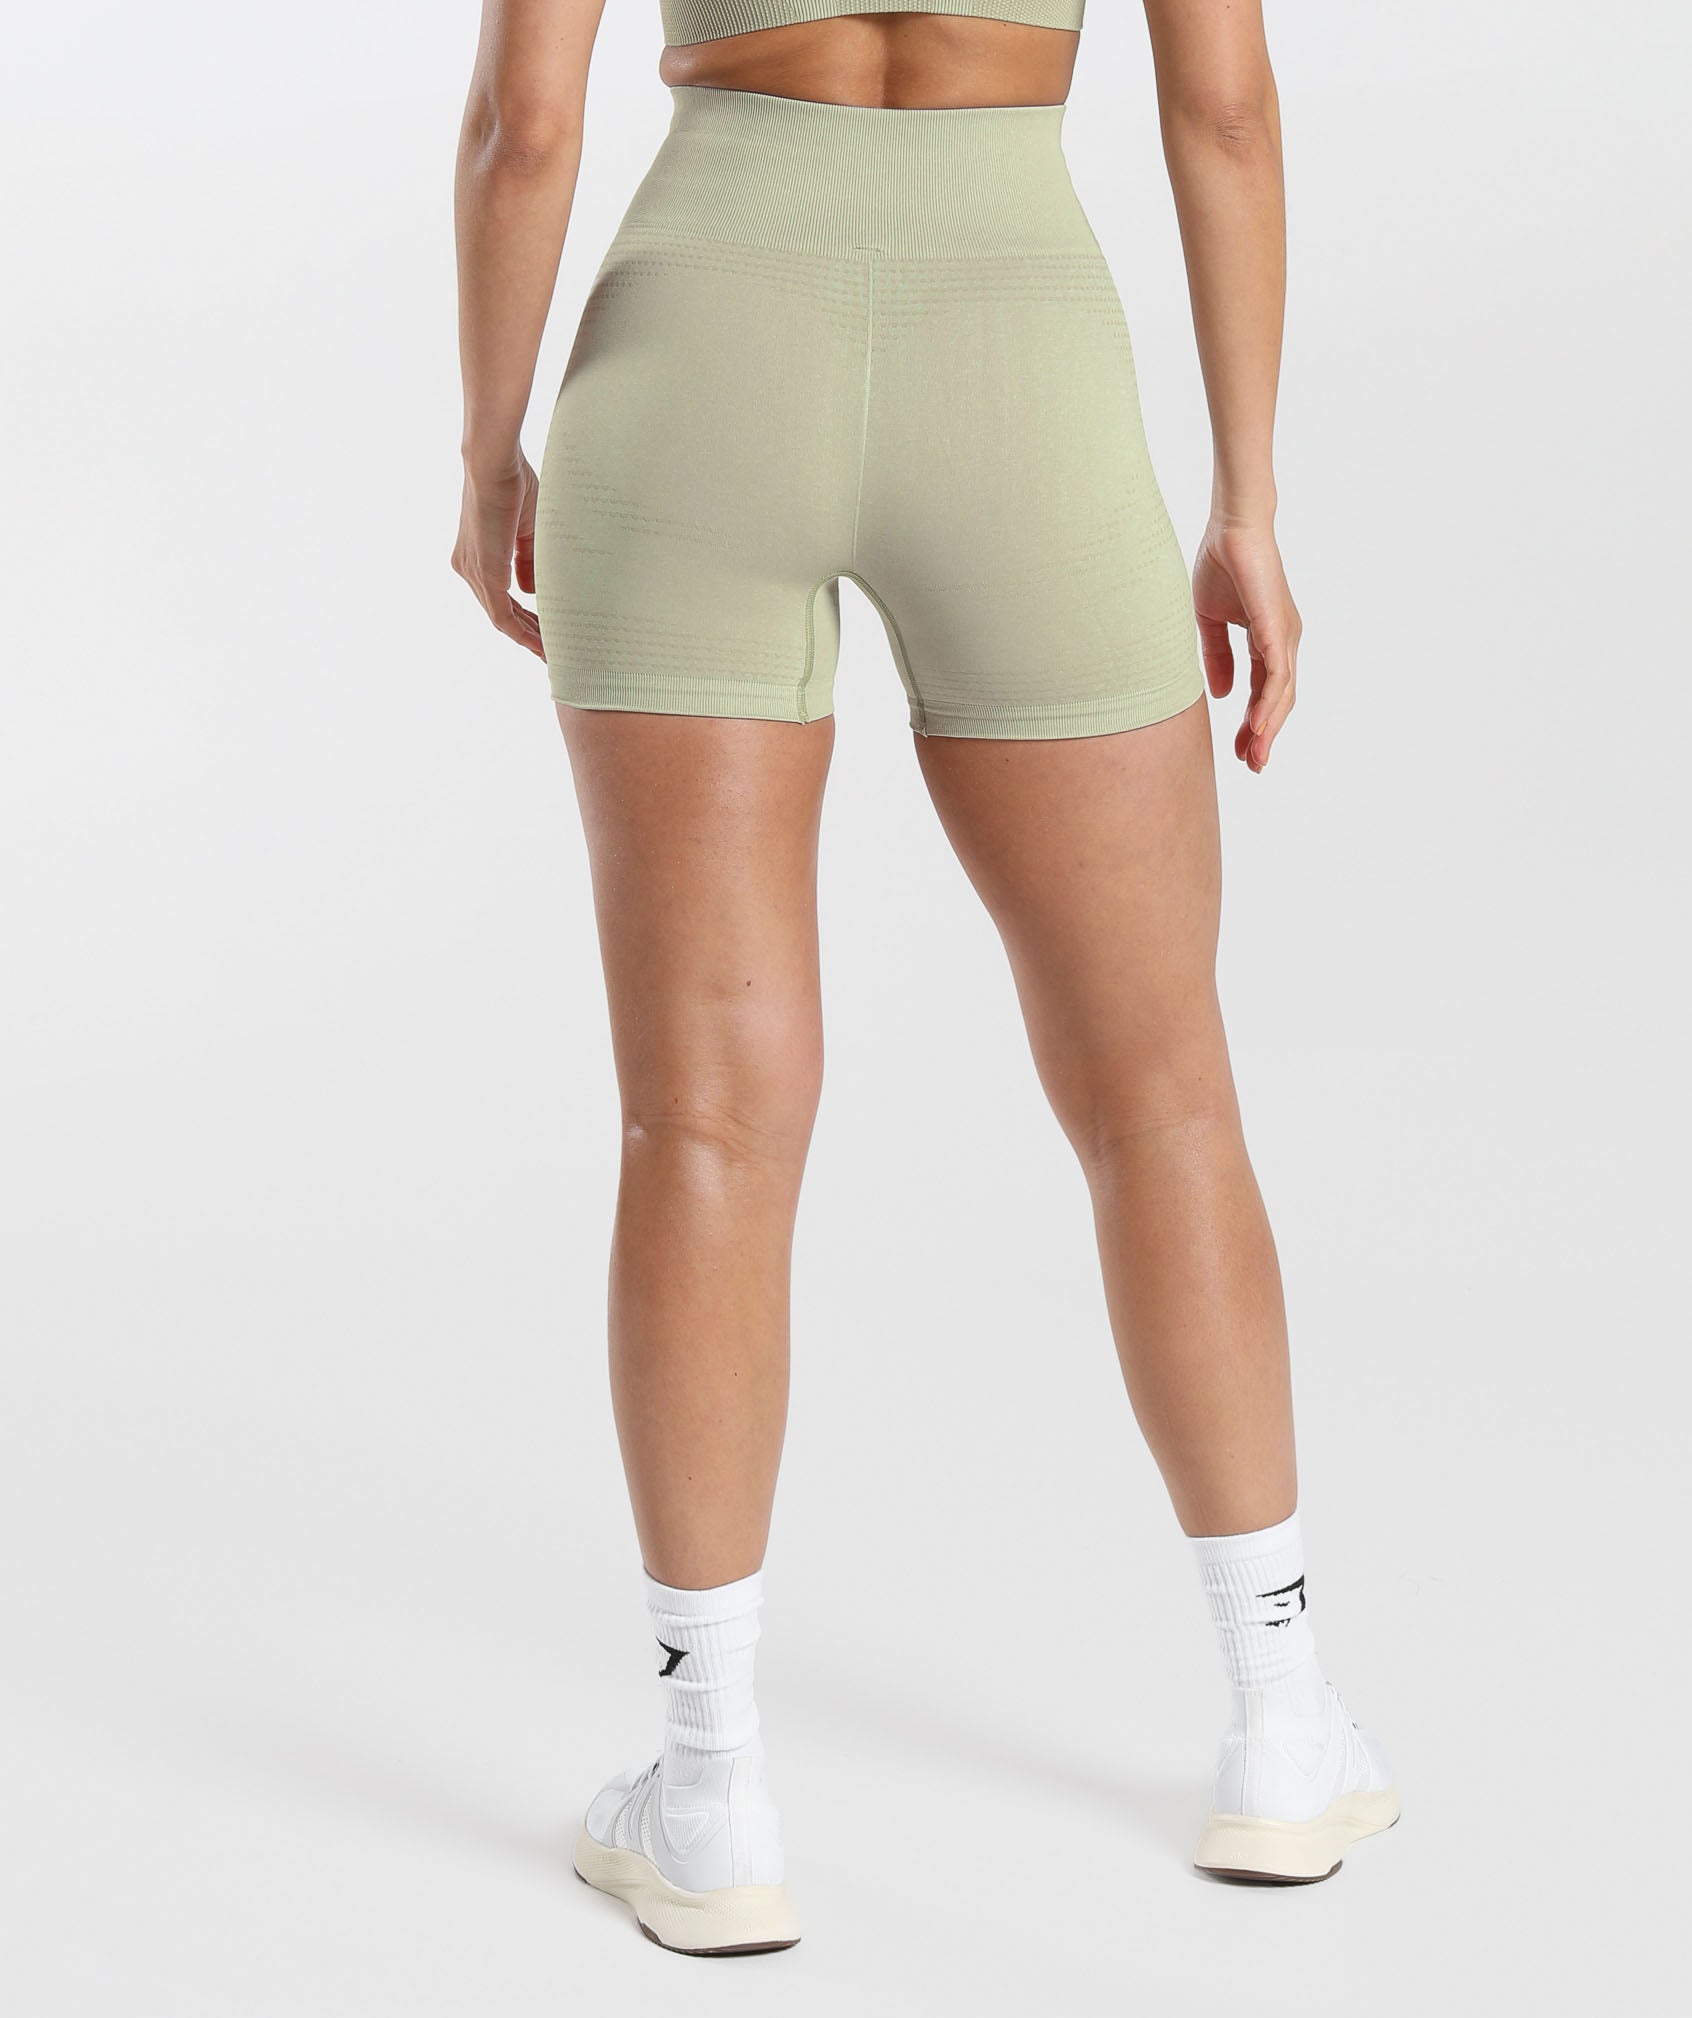 Vital Seamless 2.0 Shorts in Light Sage Green Marl - view 2